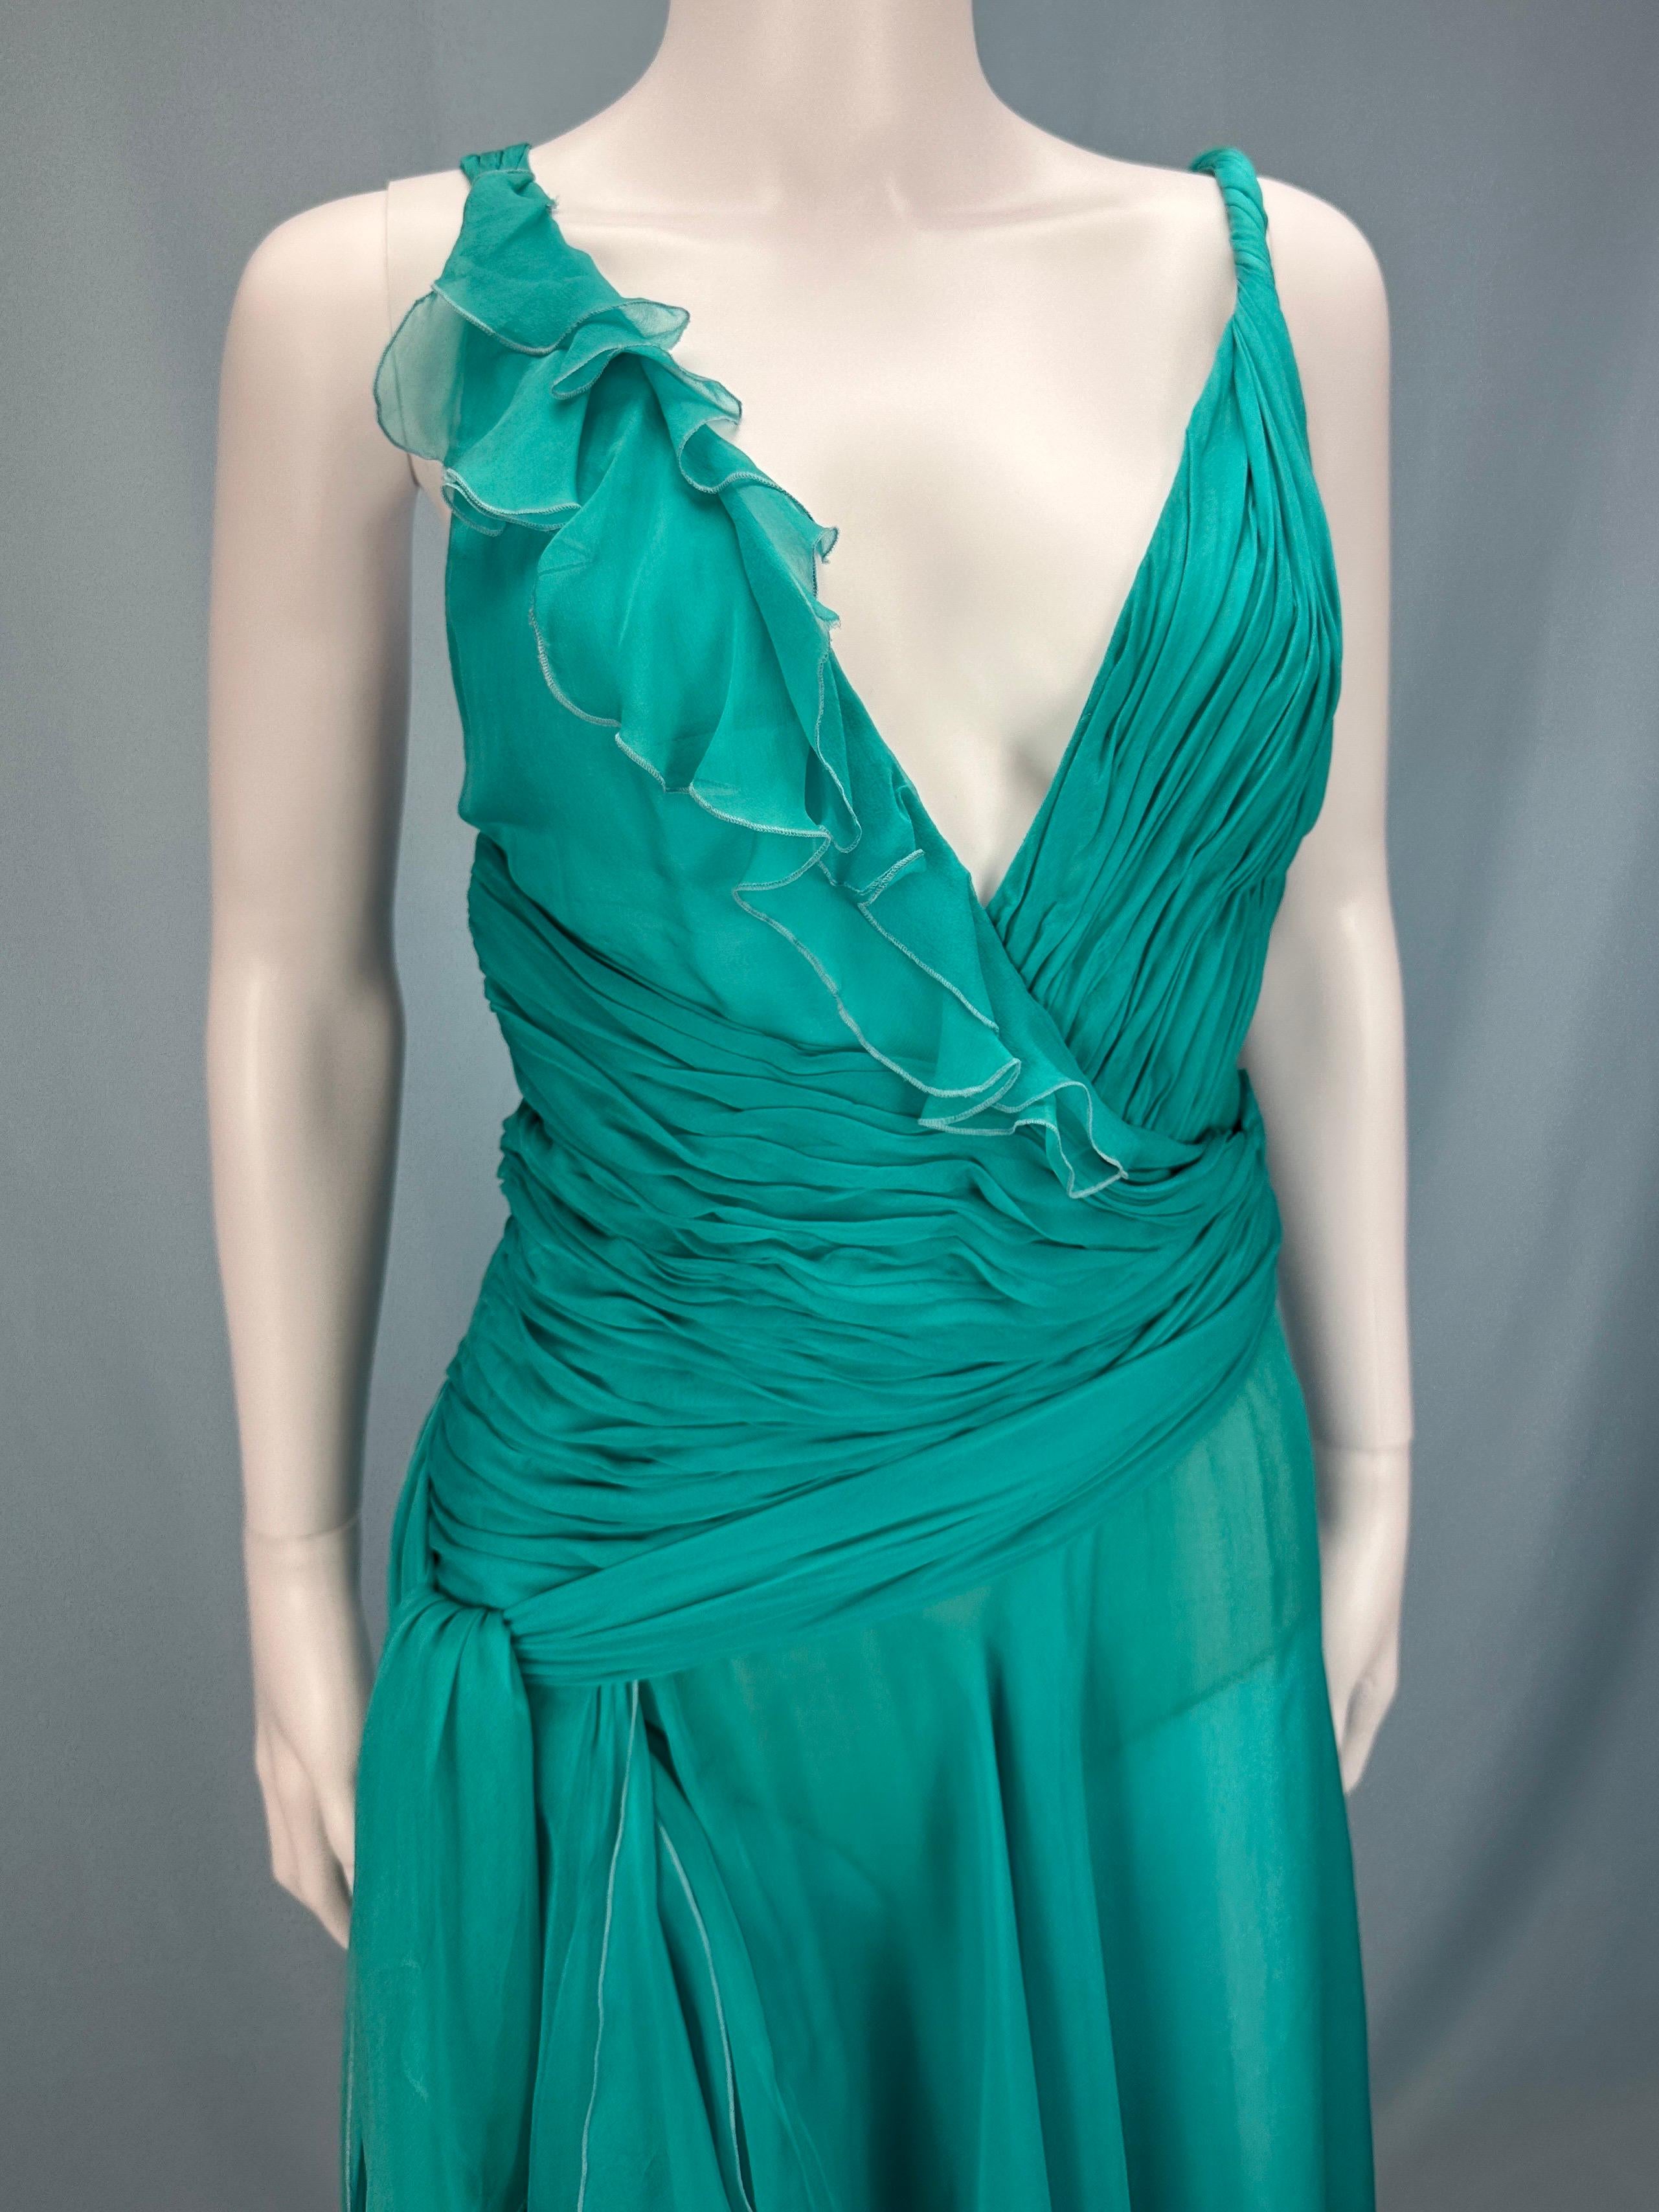 Versace Spring 2004 Teal Silk Chiffon Dress 2